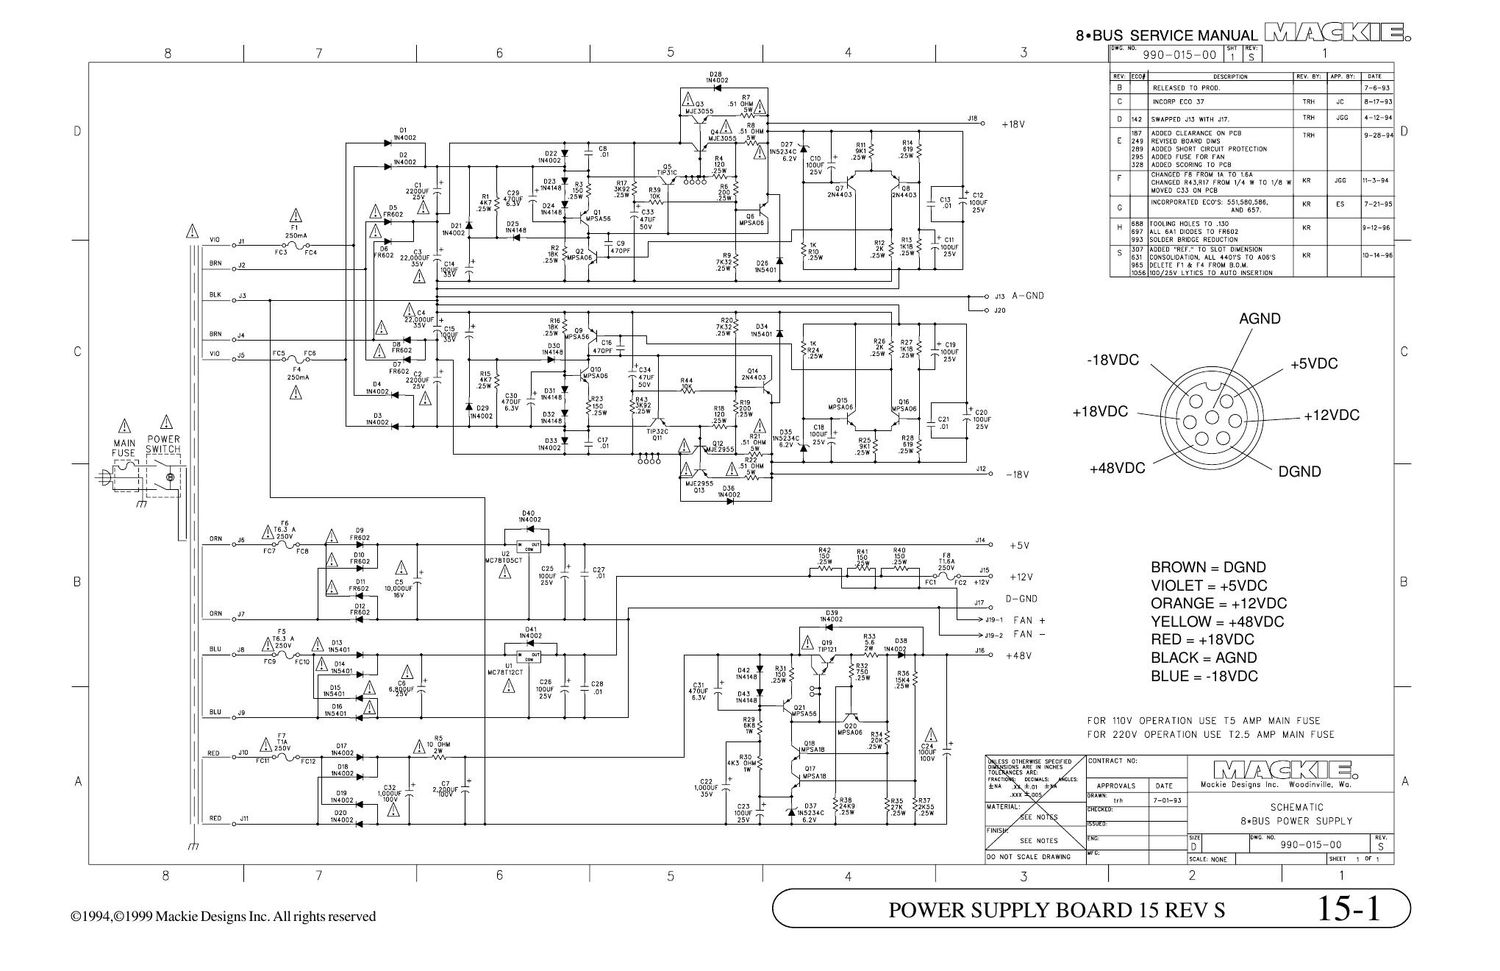 Free Audio - Free download Mackie 8bus Power Supply Schematic